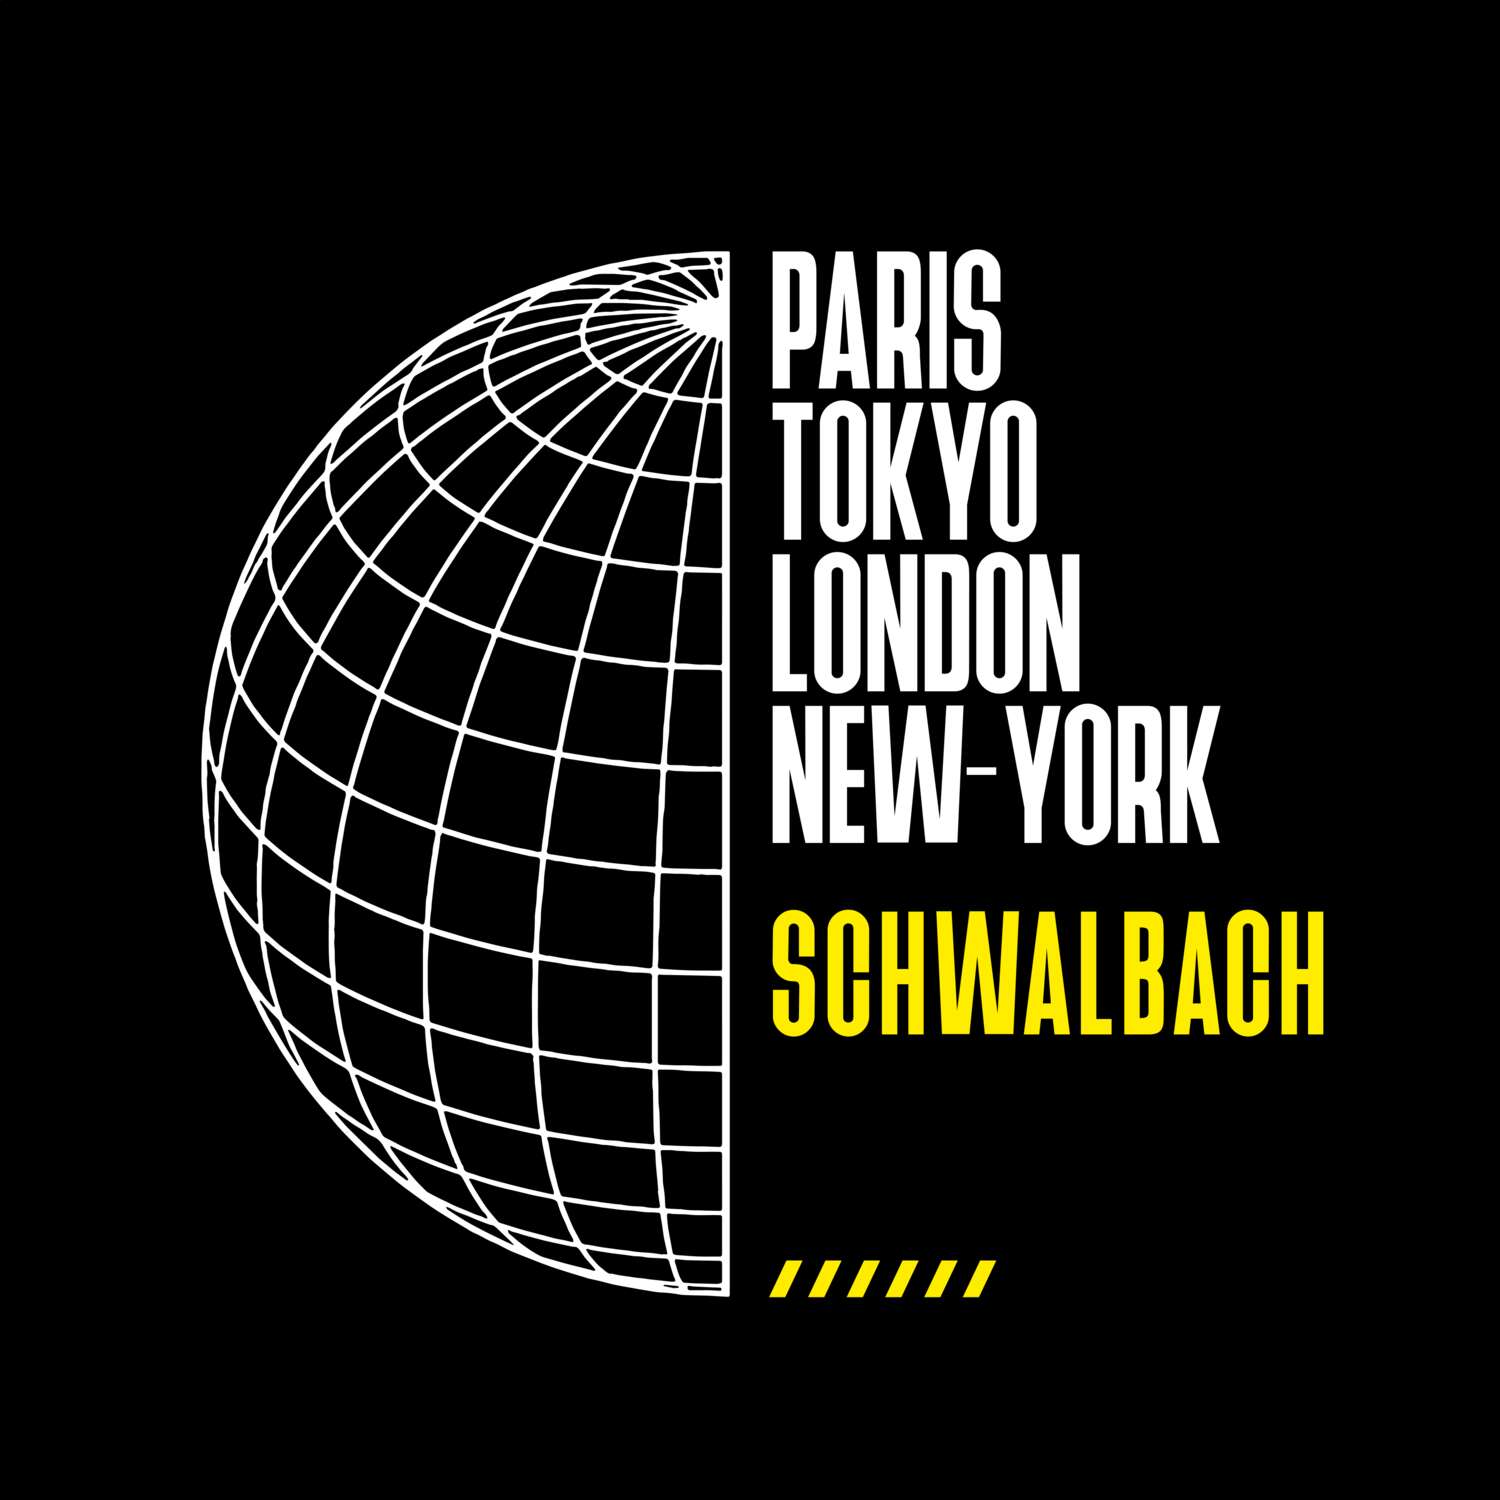 Schwalbach T-Shirt »Paris Tokyo London«